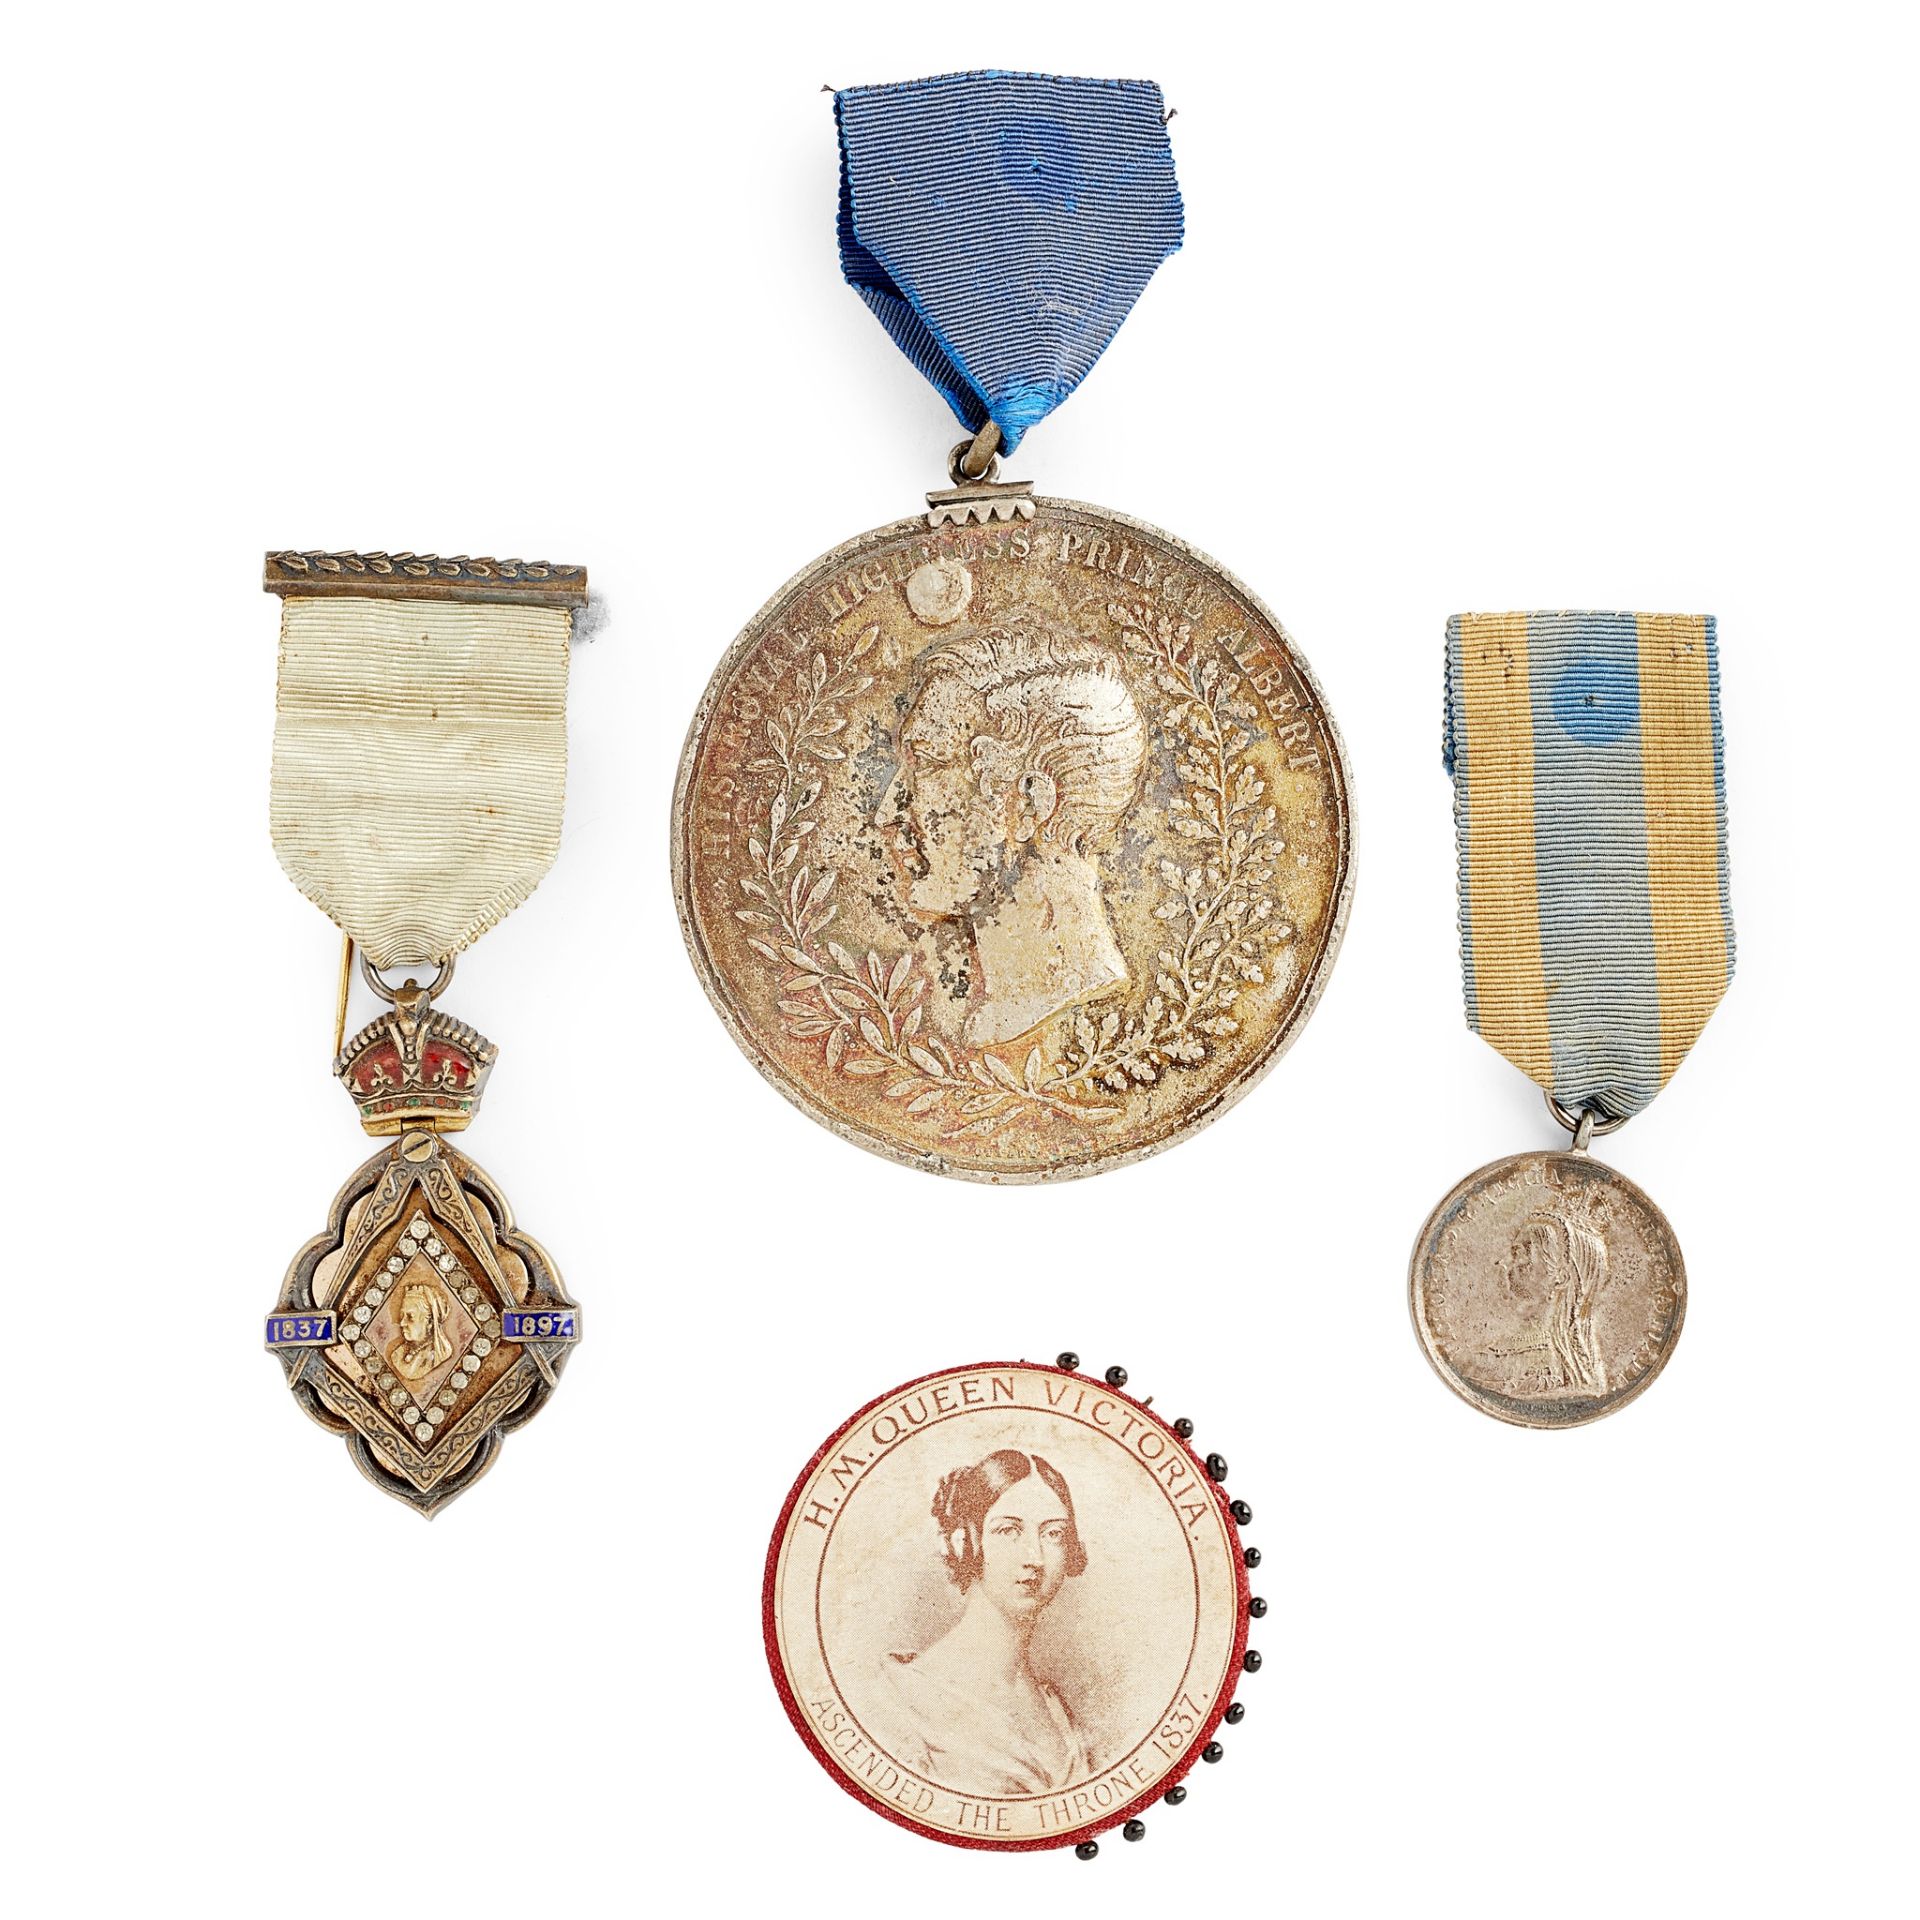 A Victorian 1887 Diamond Jubilee medal